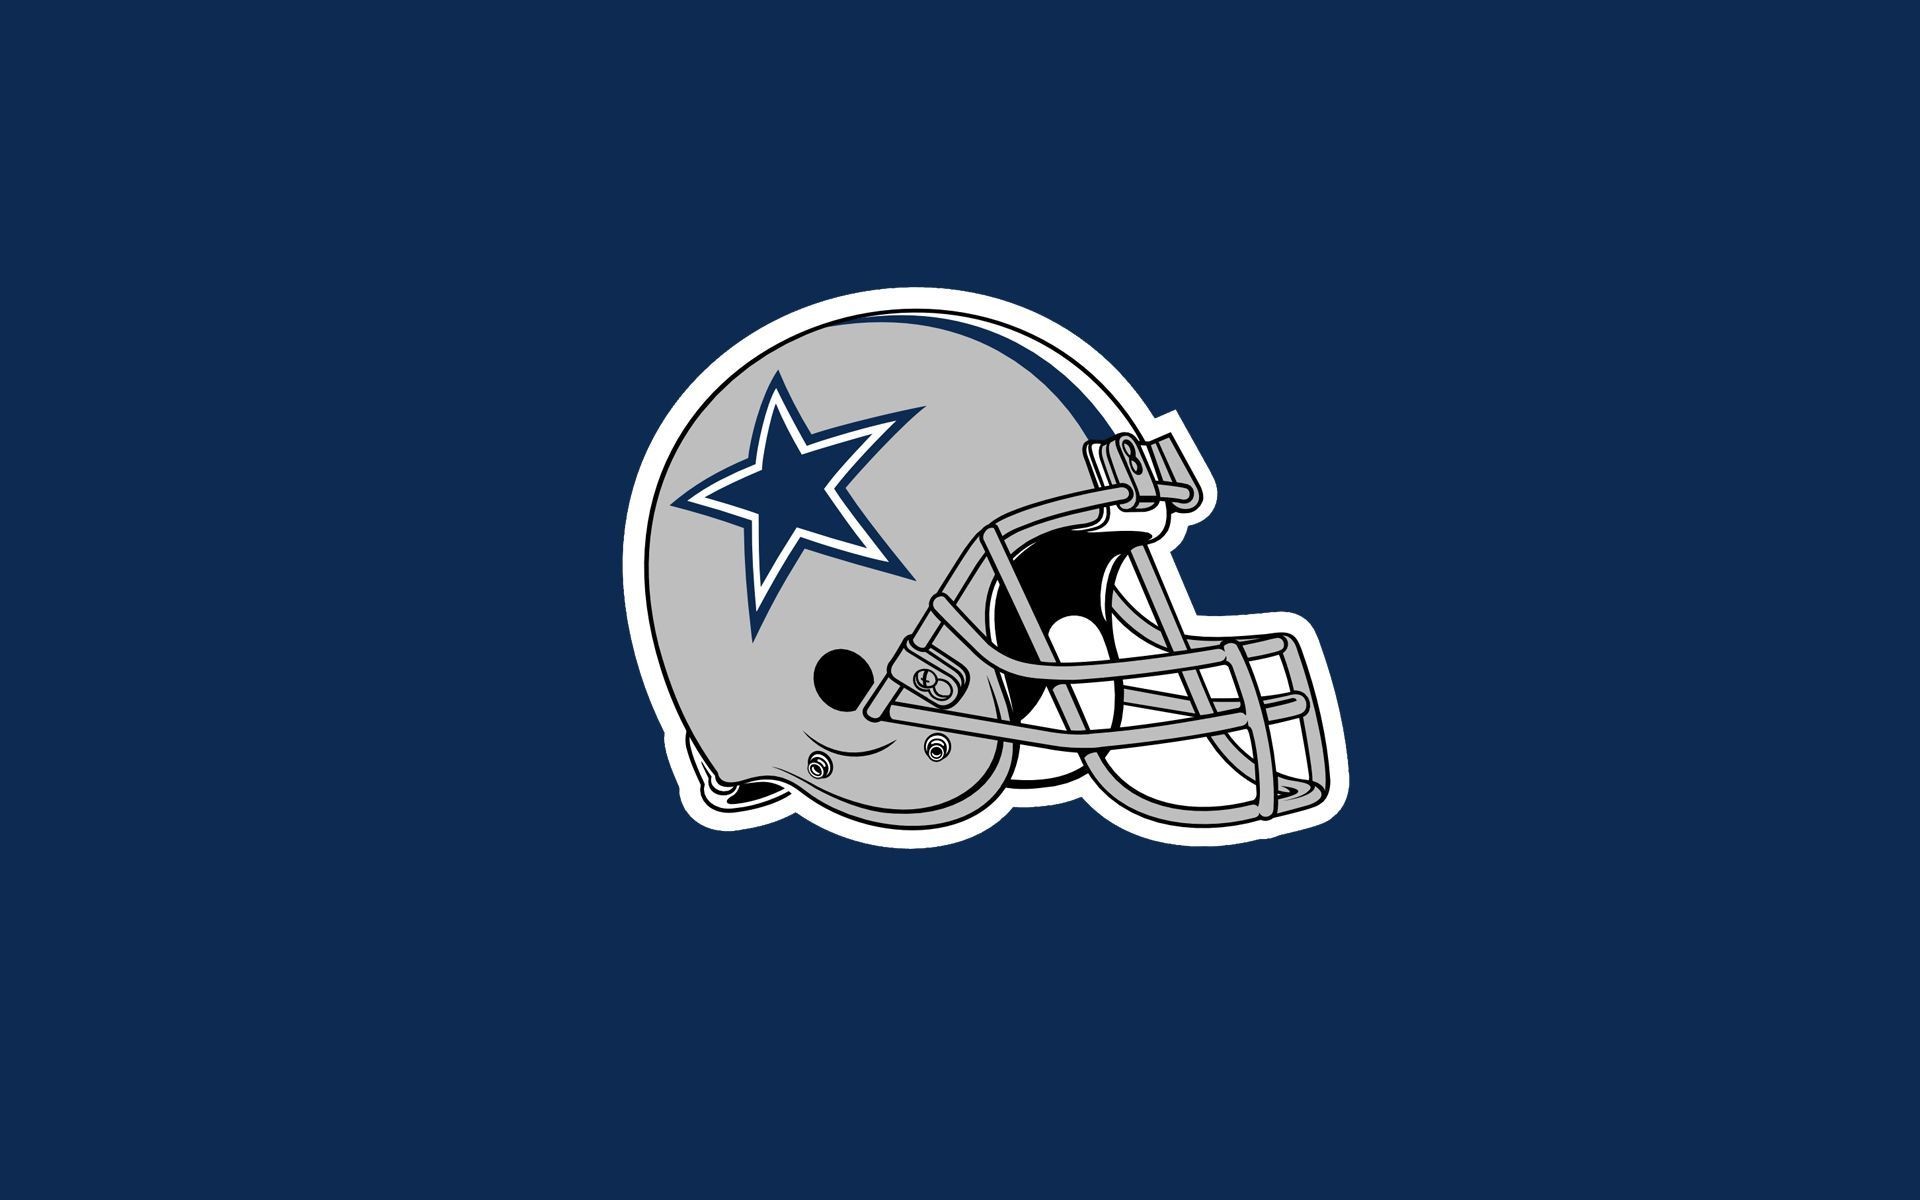 Dallas Cowboys Star Logo Wallpaper Image